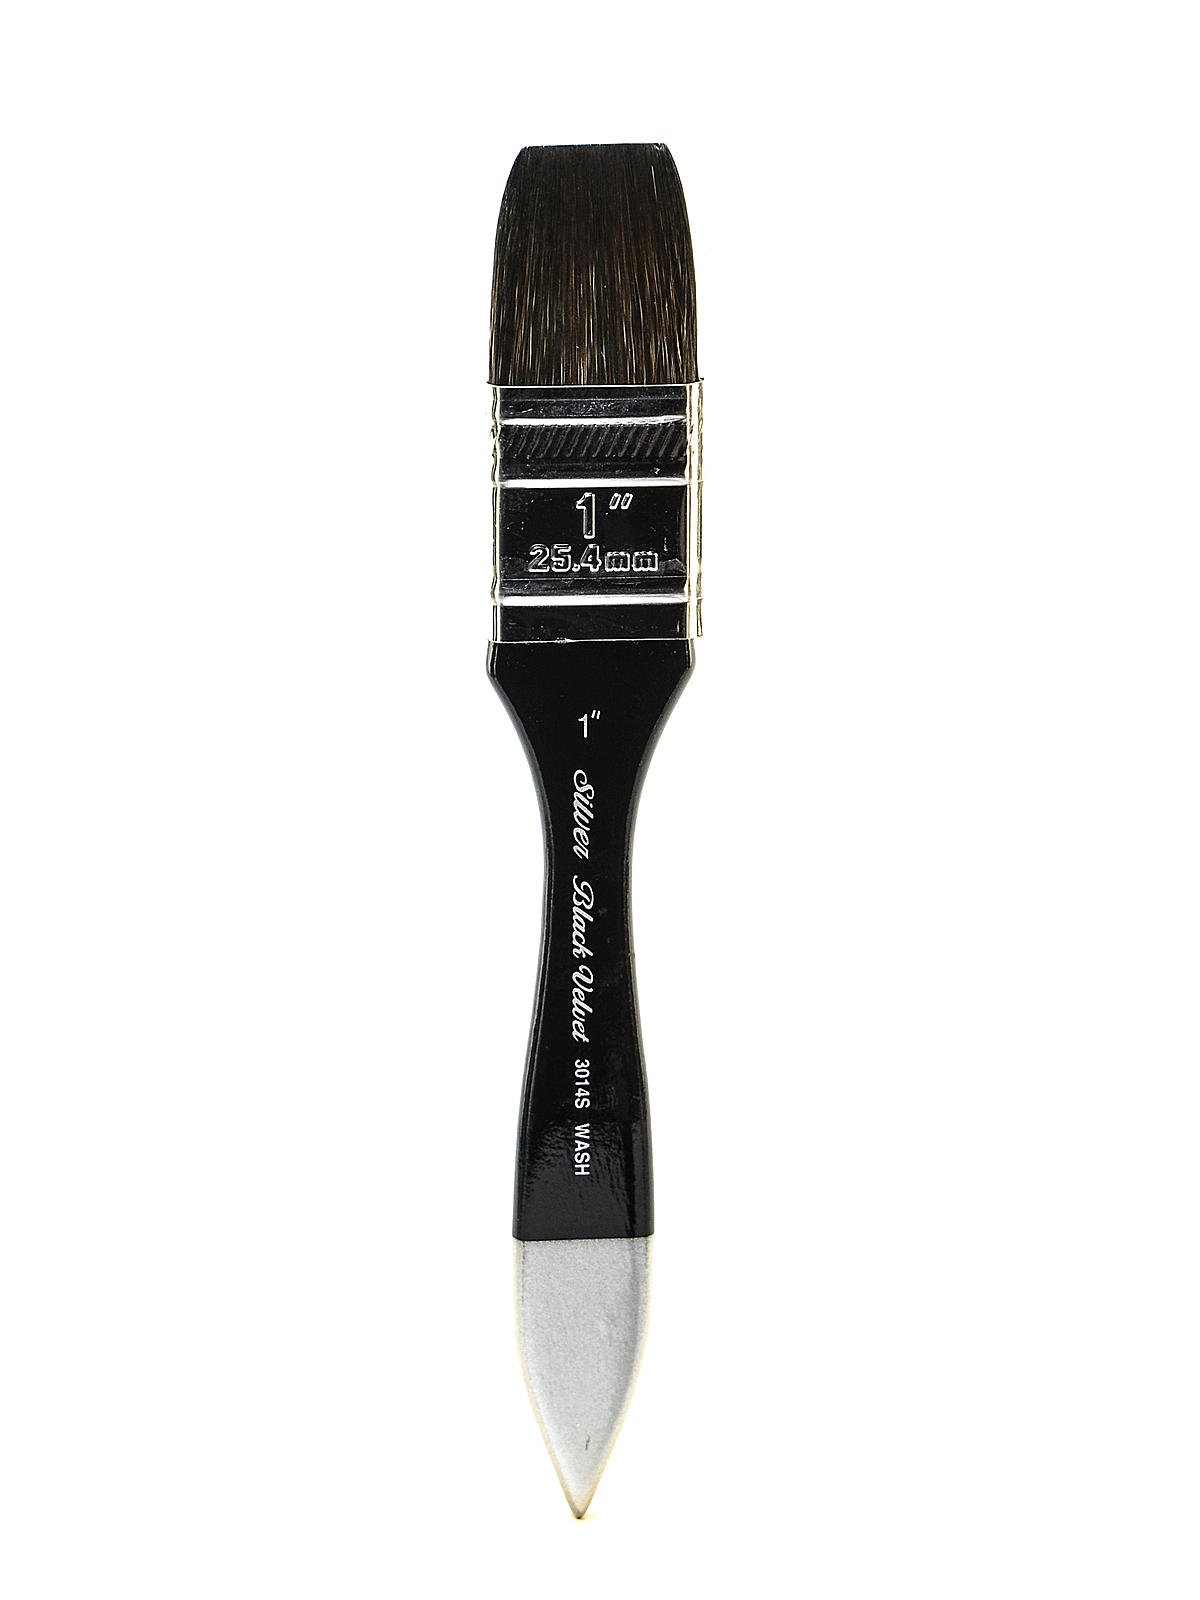 SilverBrush BlackVelvet Squirrel-Risslon Watercolor Brush 3012S Dagger  Striper Watercolor Acrylics Gouache Painting Art Supplies